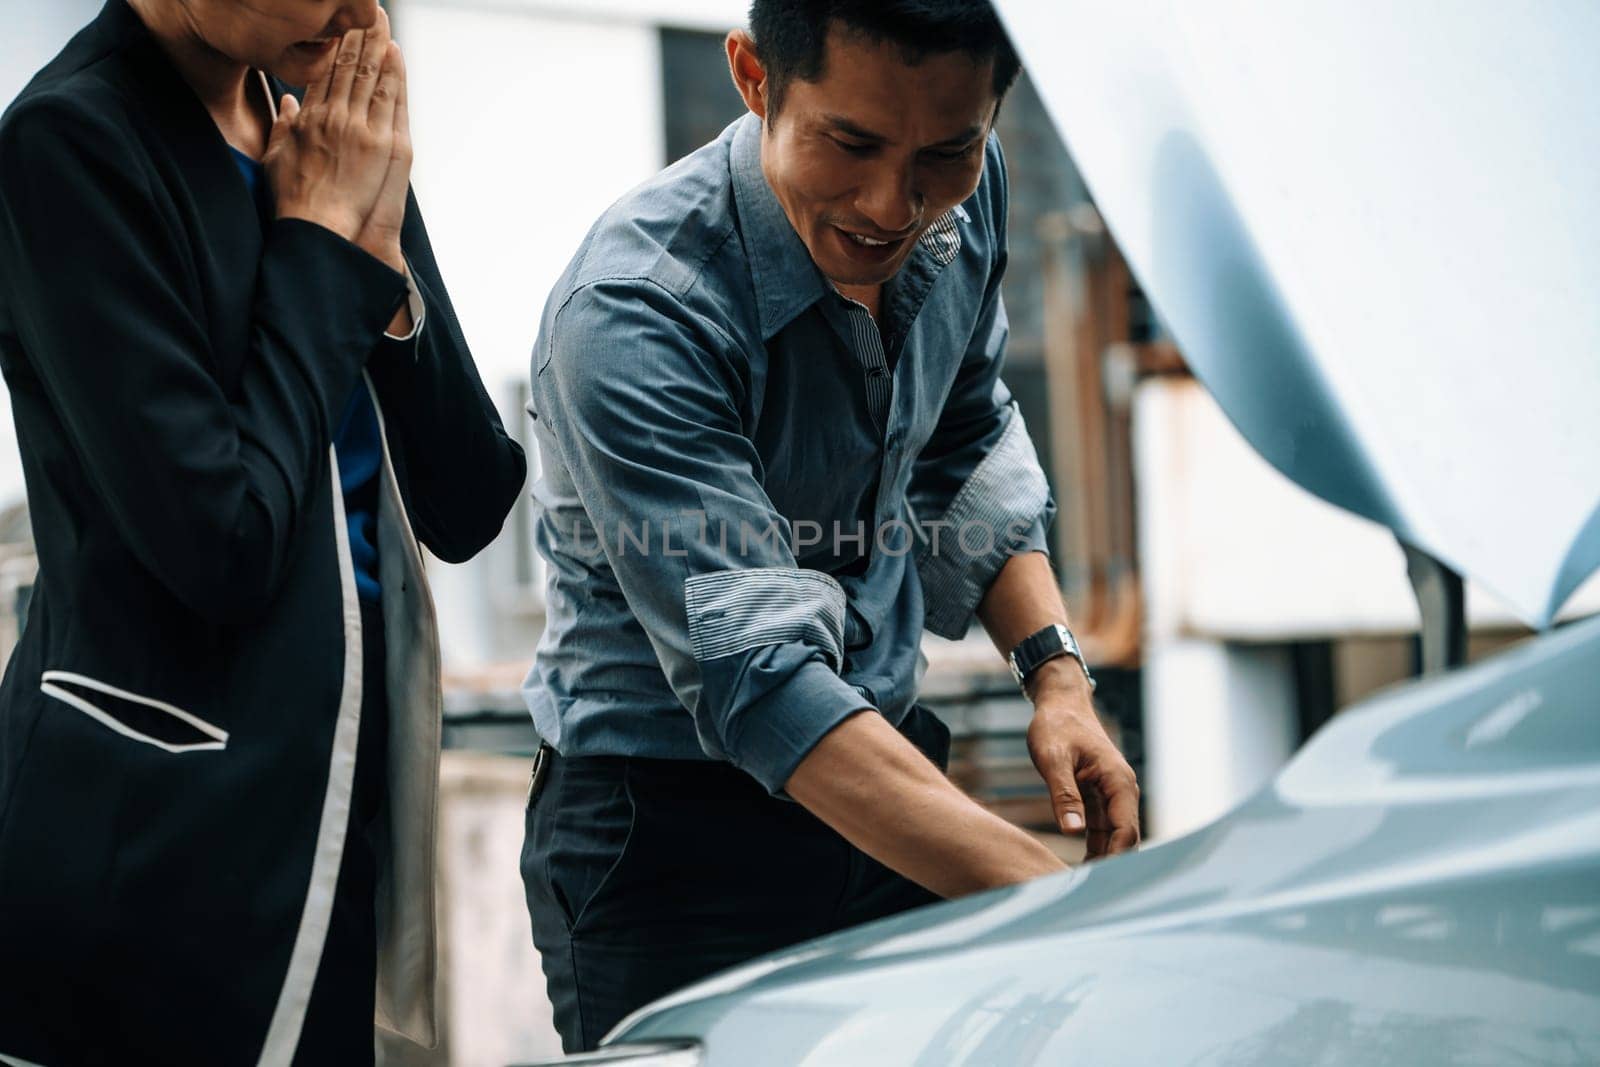 Man help woman fix the car problem. uds by biancoblue